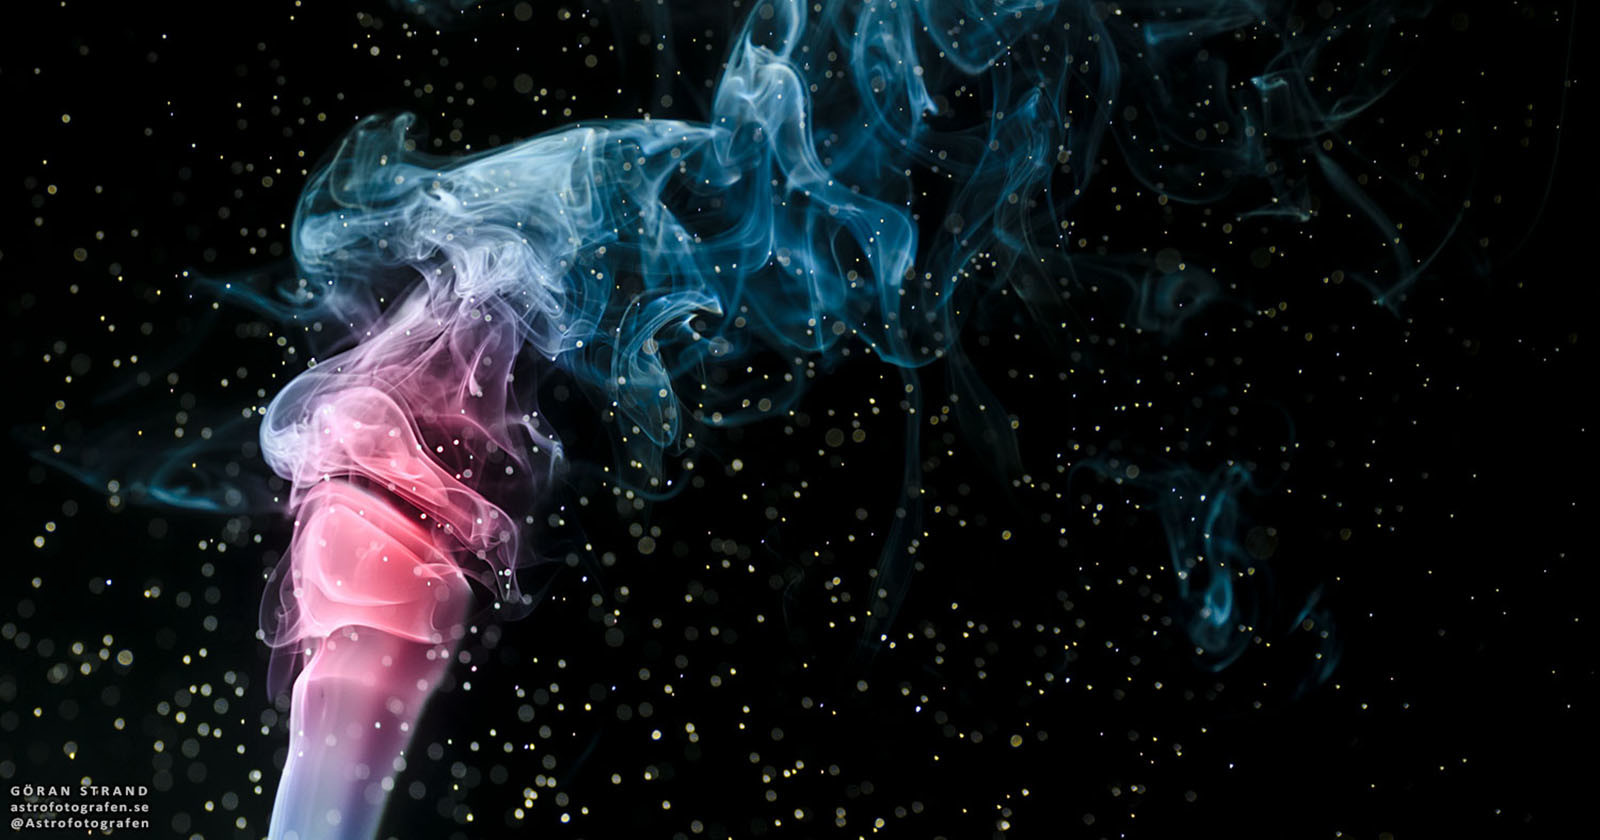  how shoot space nebula smoke photos home 